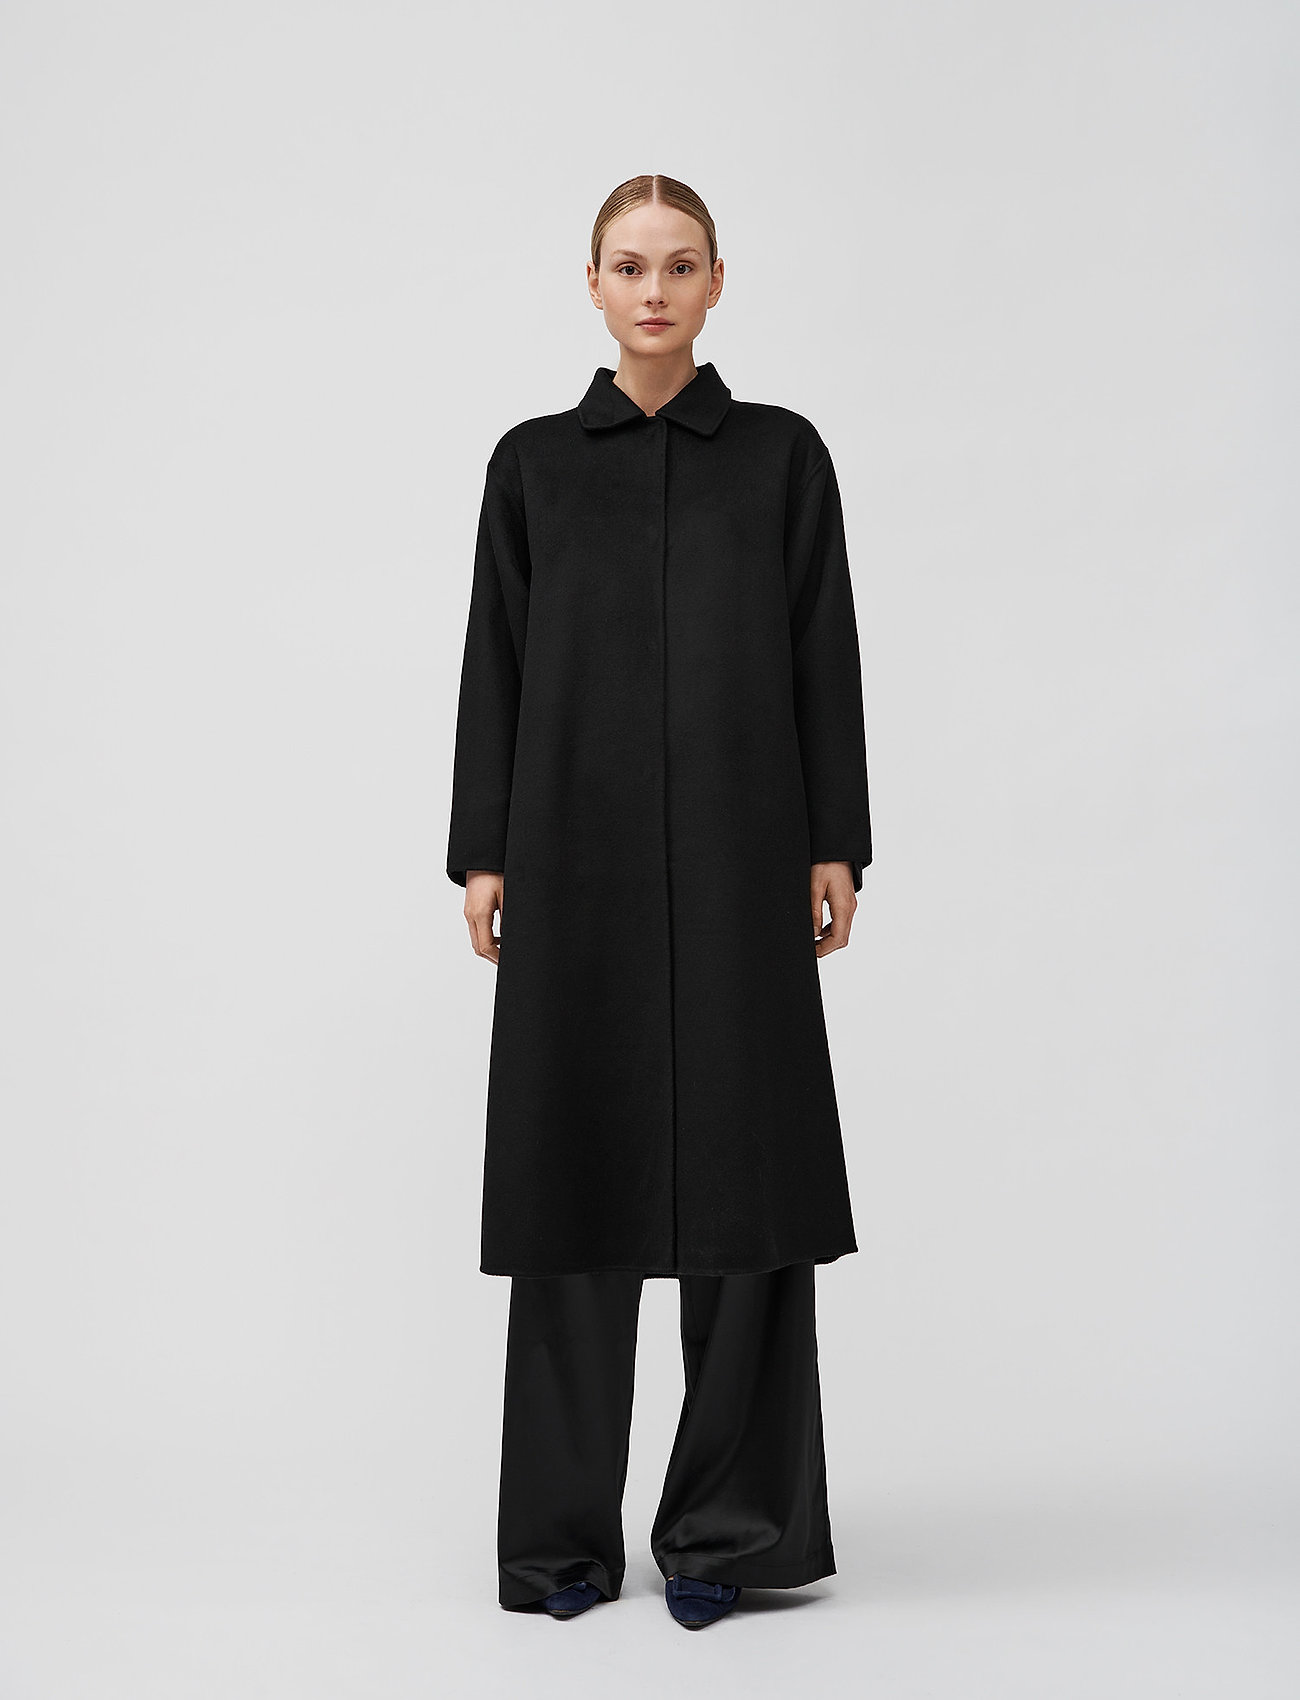 Stylein - TRILLA COAT - light coats - black - 0